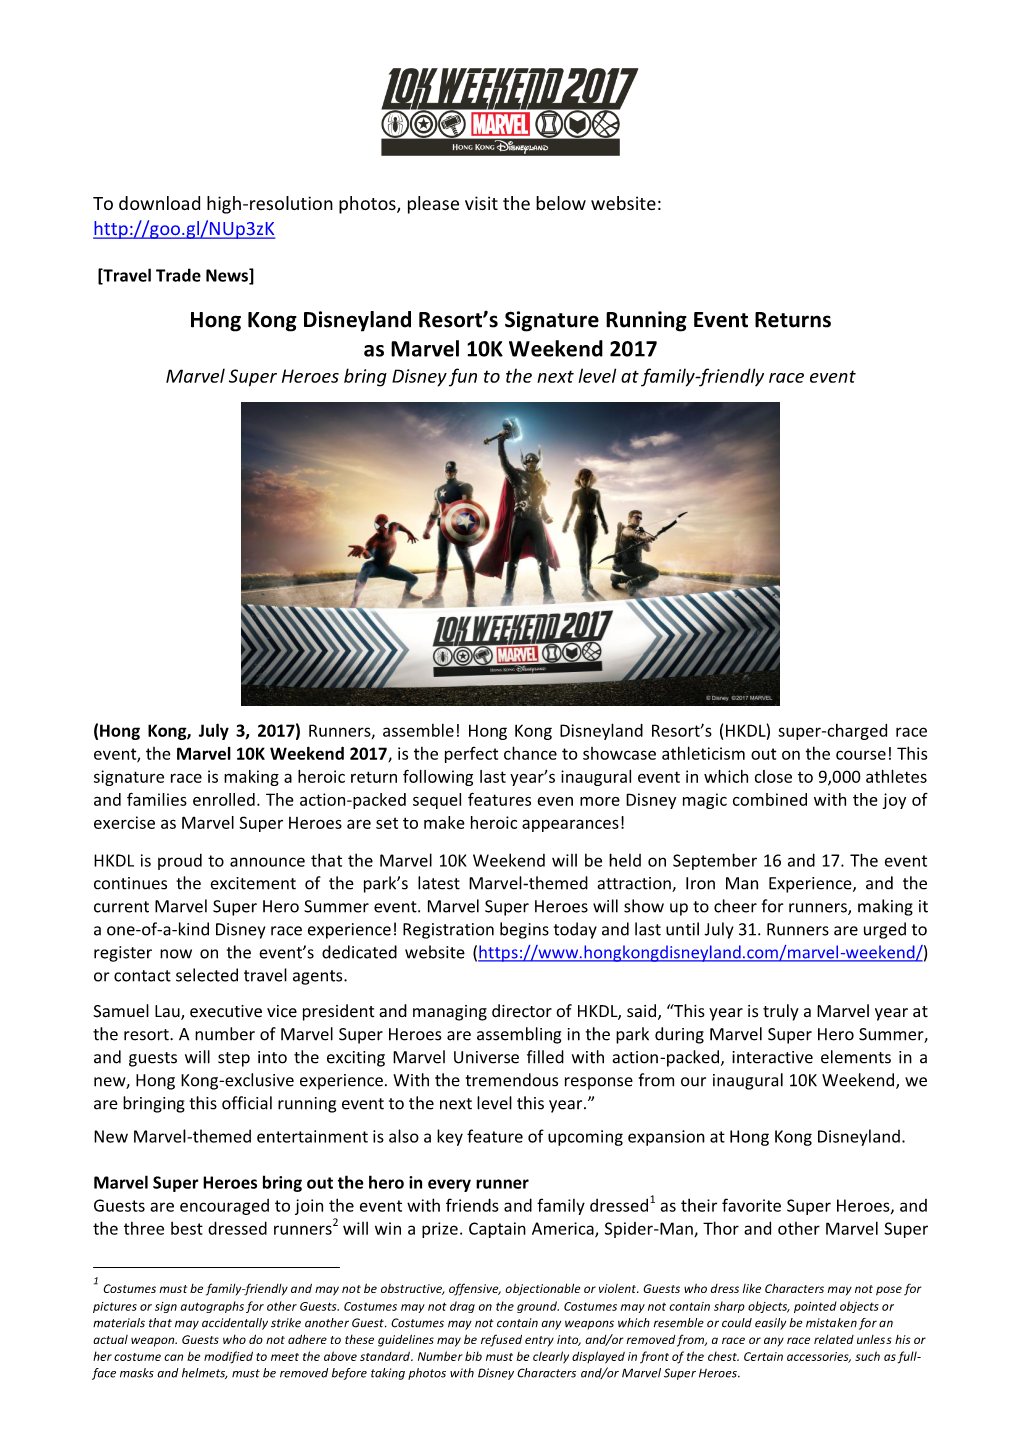 Hong Kong Disneyland Resort's Signature Running Event Returns